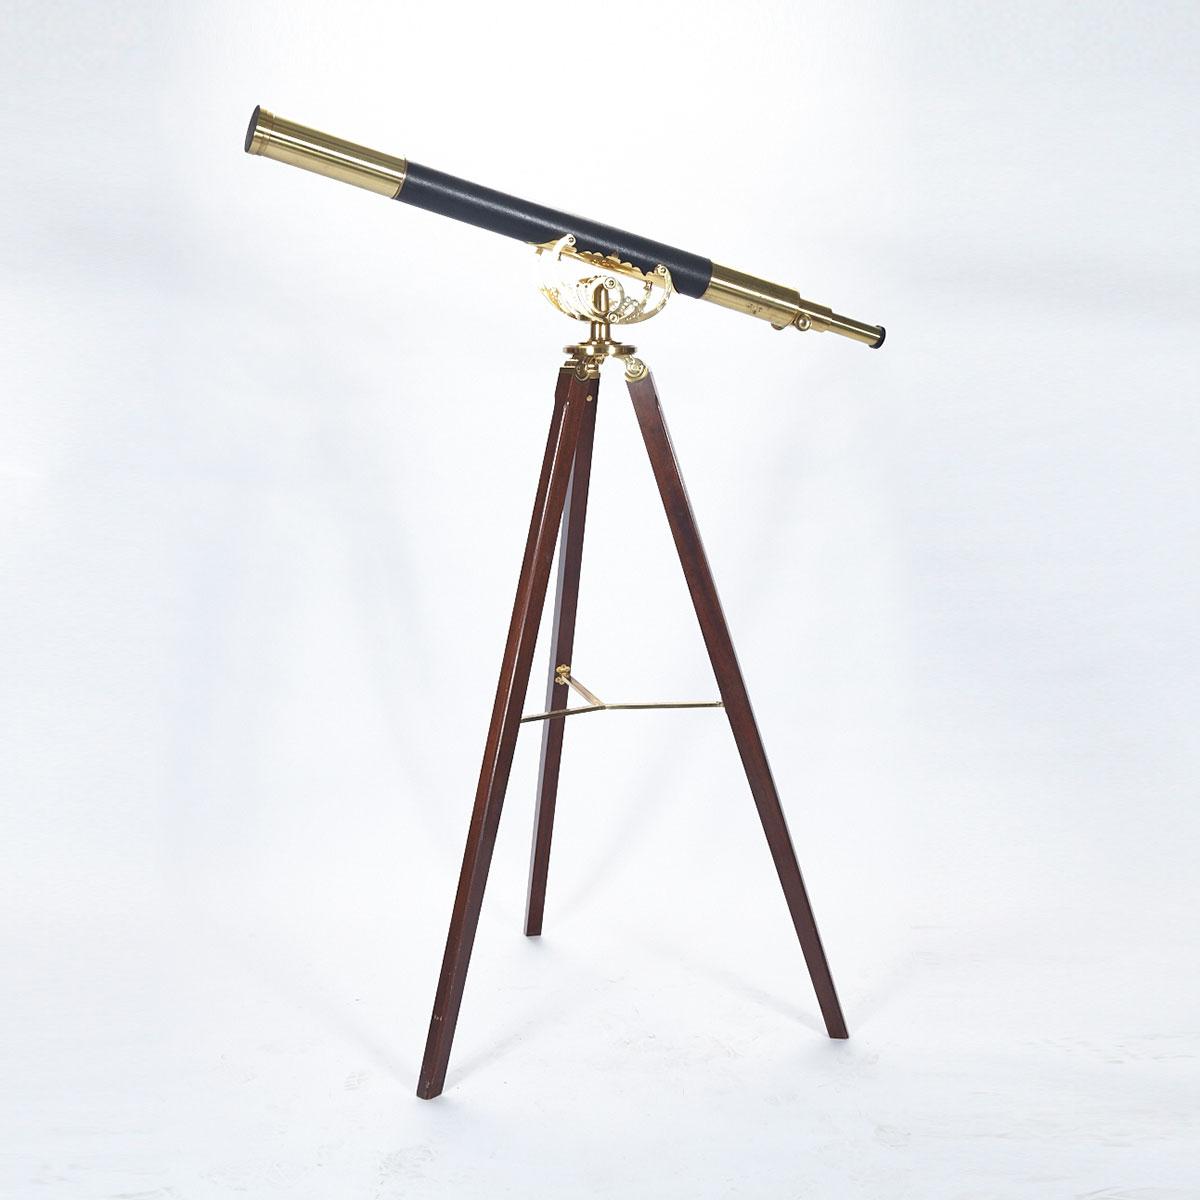 English Lacquered Brass Harbour Master’s Telescope, R. & J. Beck Ltd., London, c.1974